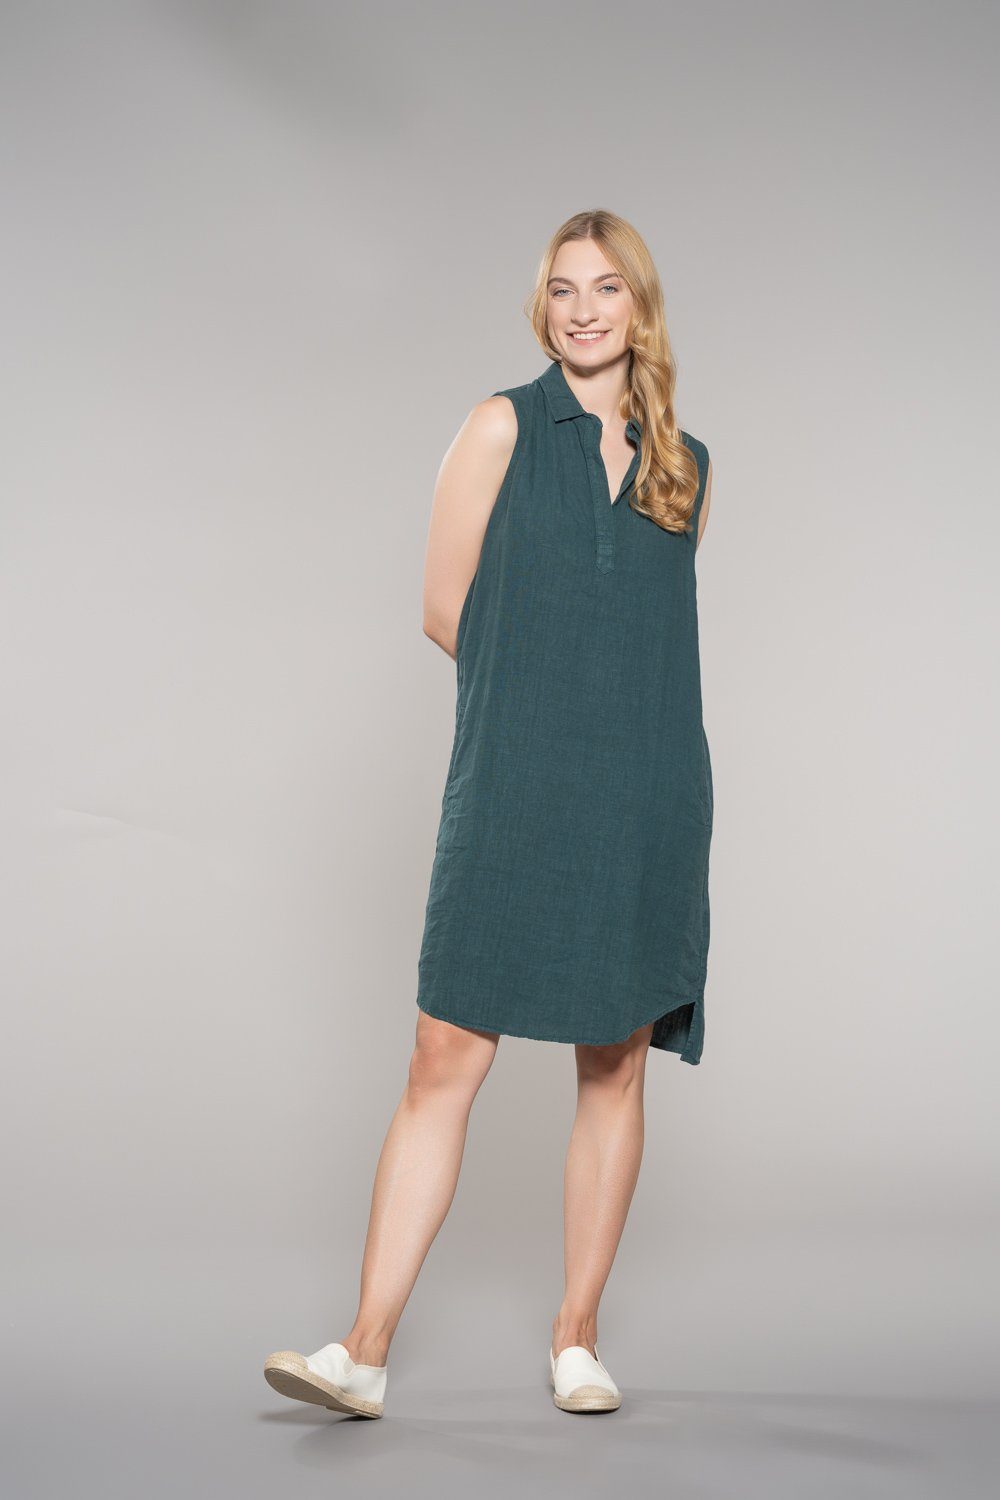 Feuervogl A-Linien-Kleid fv-Ki:ki, Shirt Dress, A-Shape, Sleeveless, Pure Linen Emerald Green